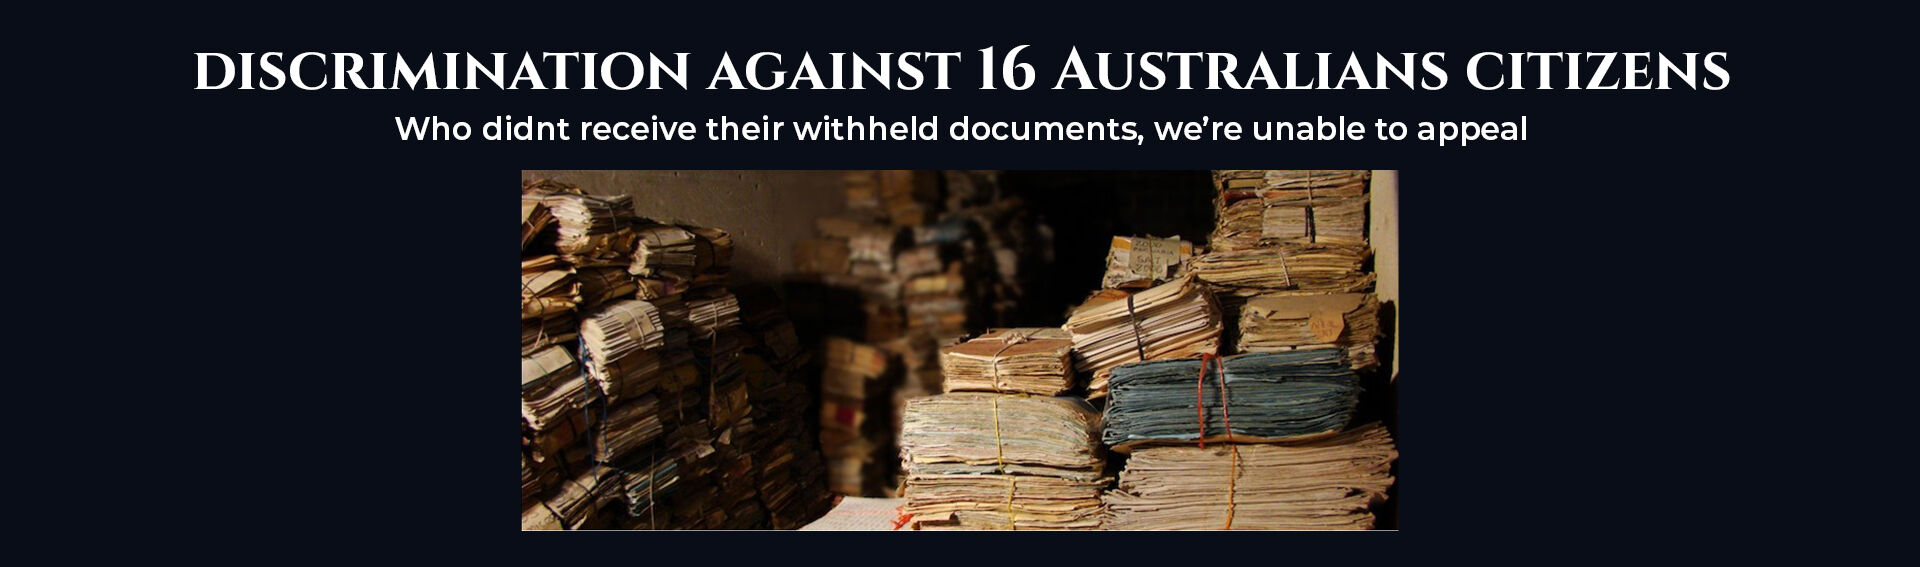 Absent Justice - Discrimination against 19 Australian Citizens